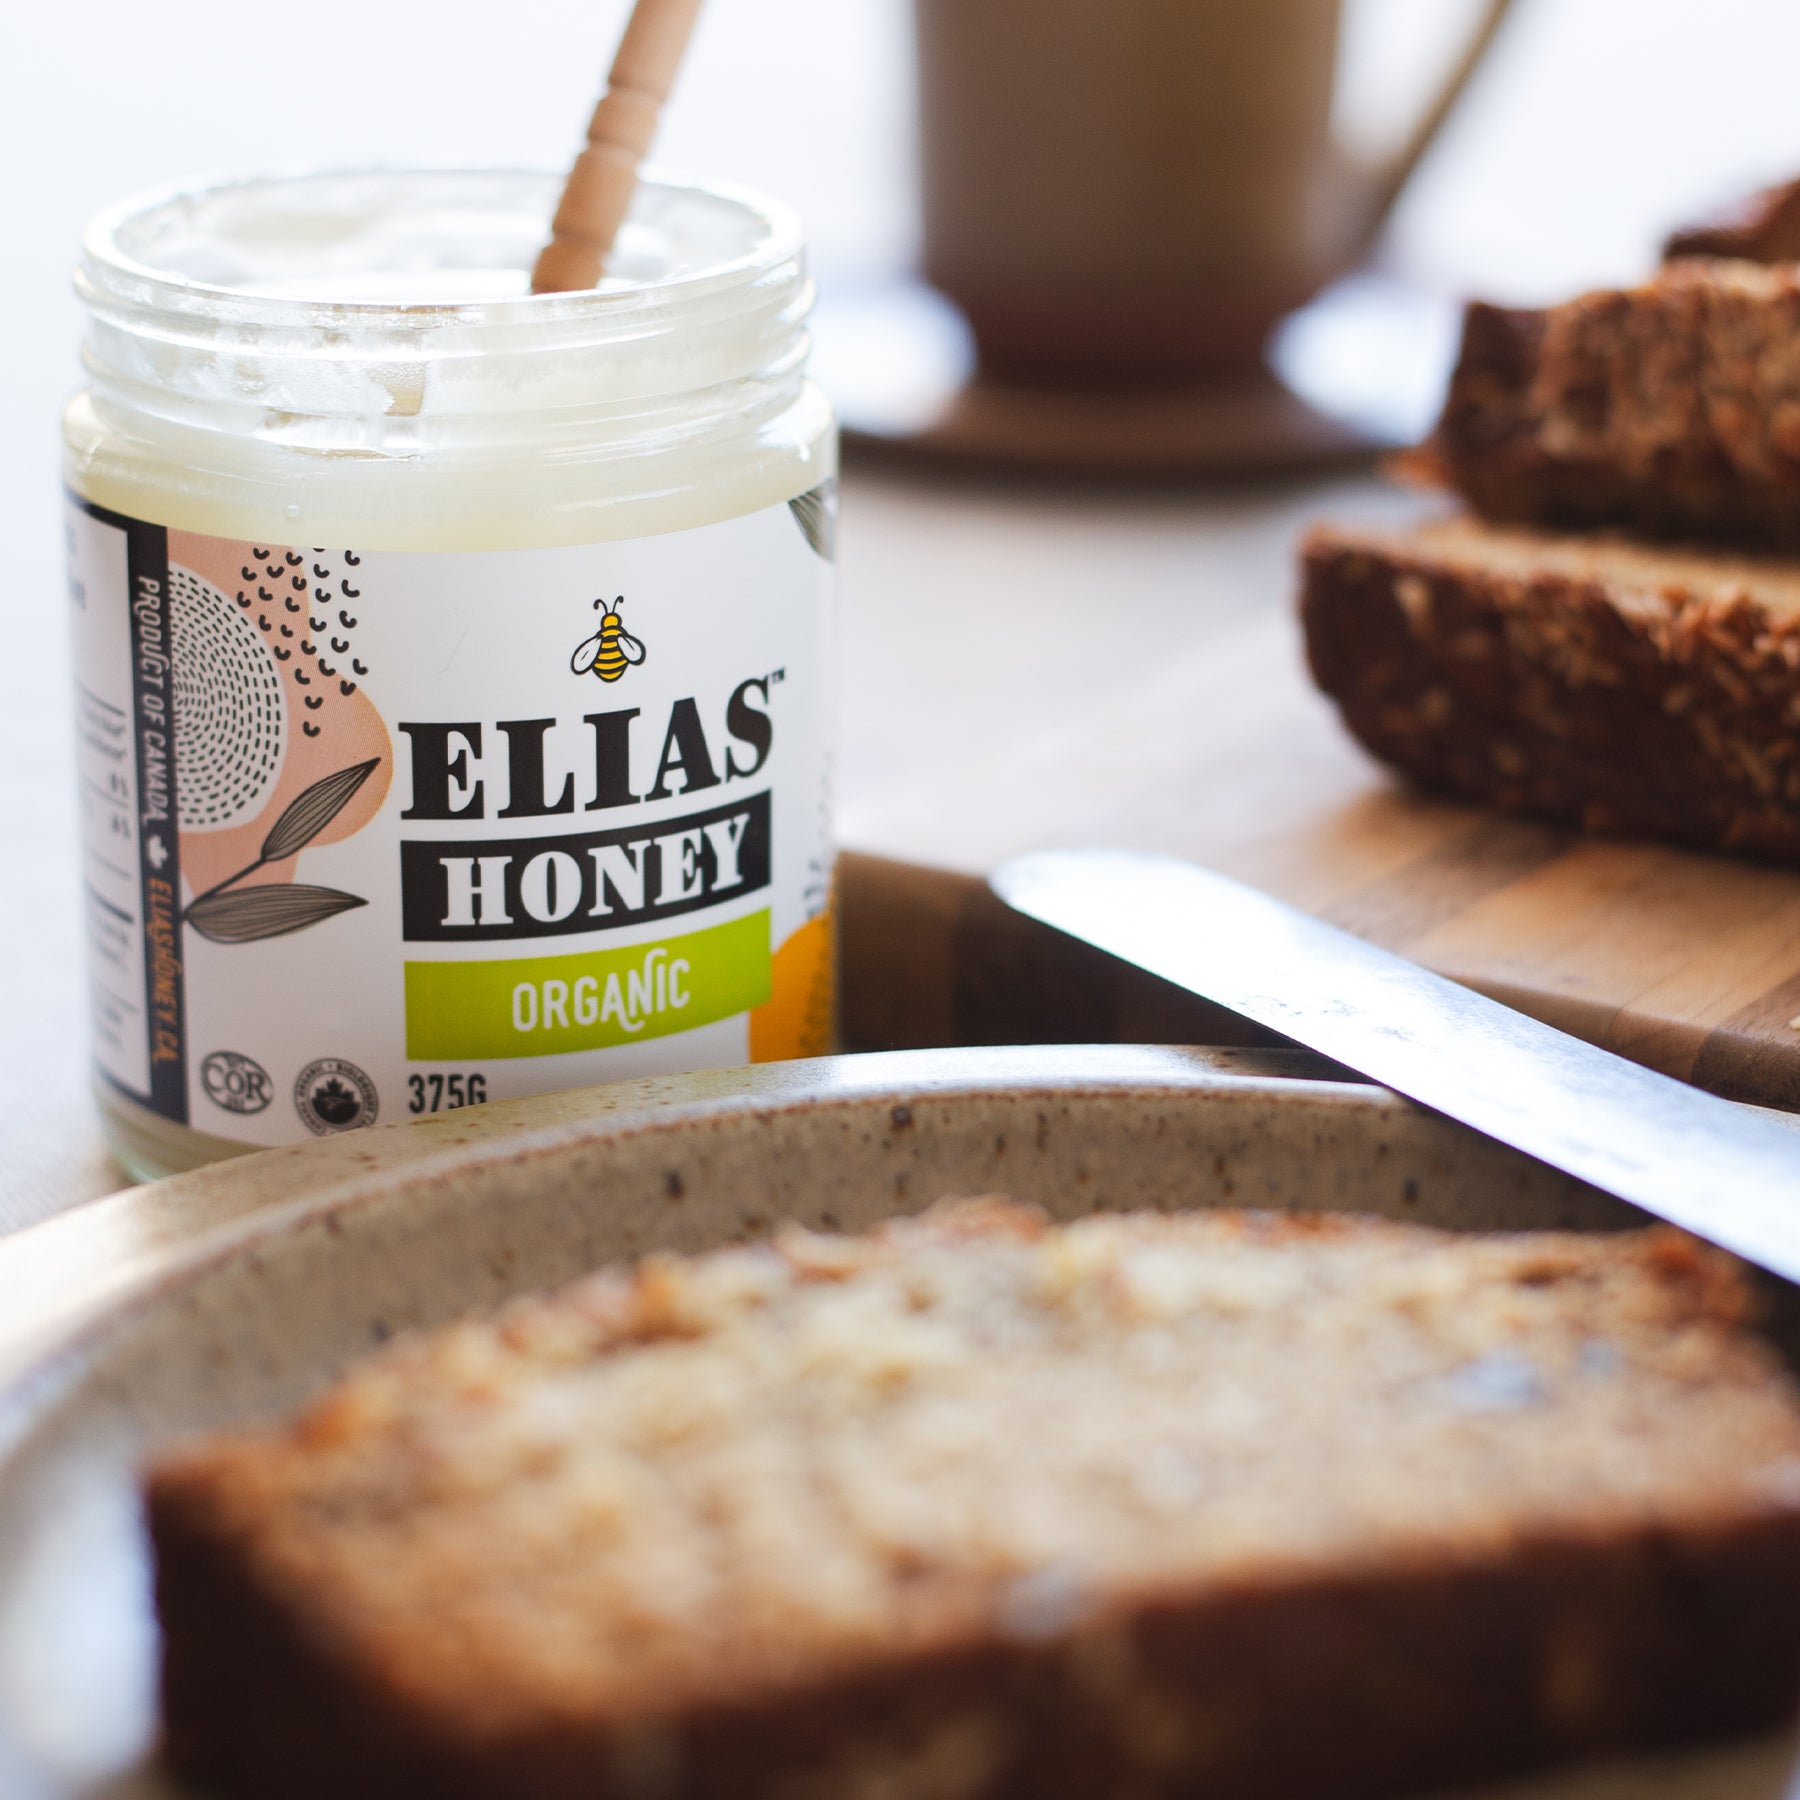 Image of Elias Honey Organic Honey with breakfast